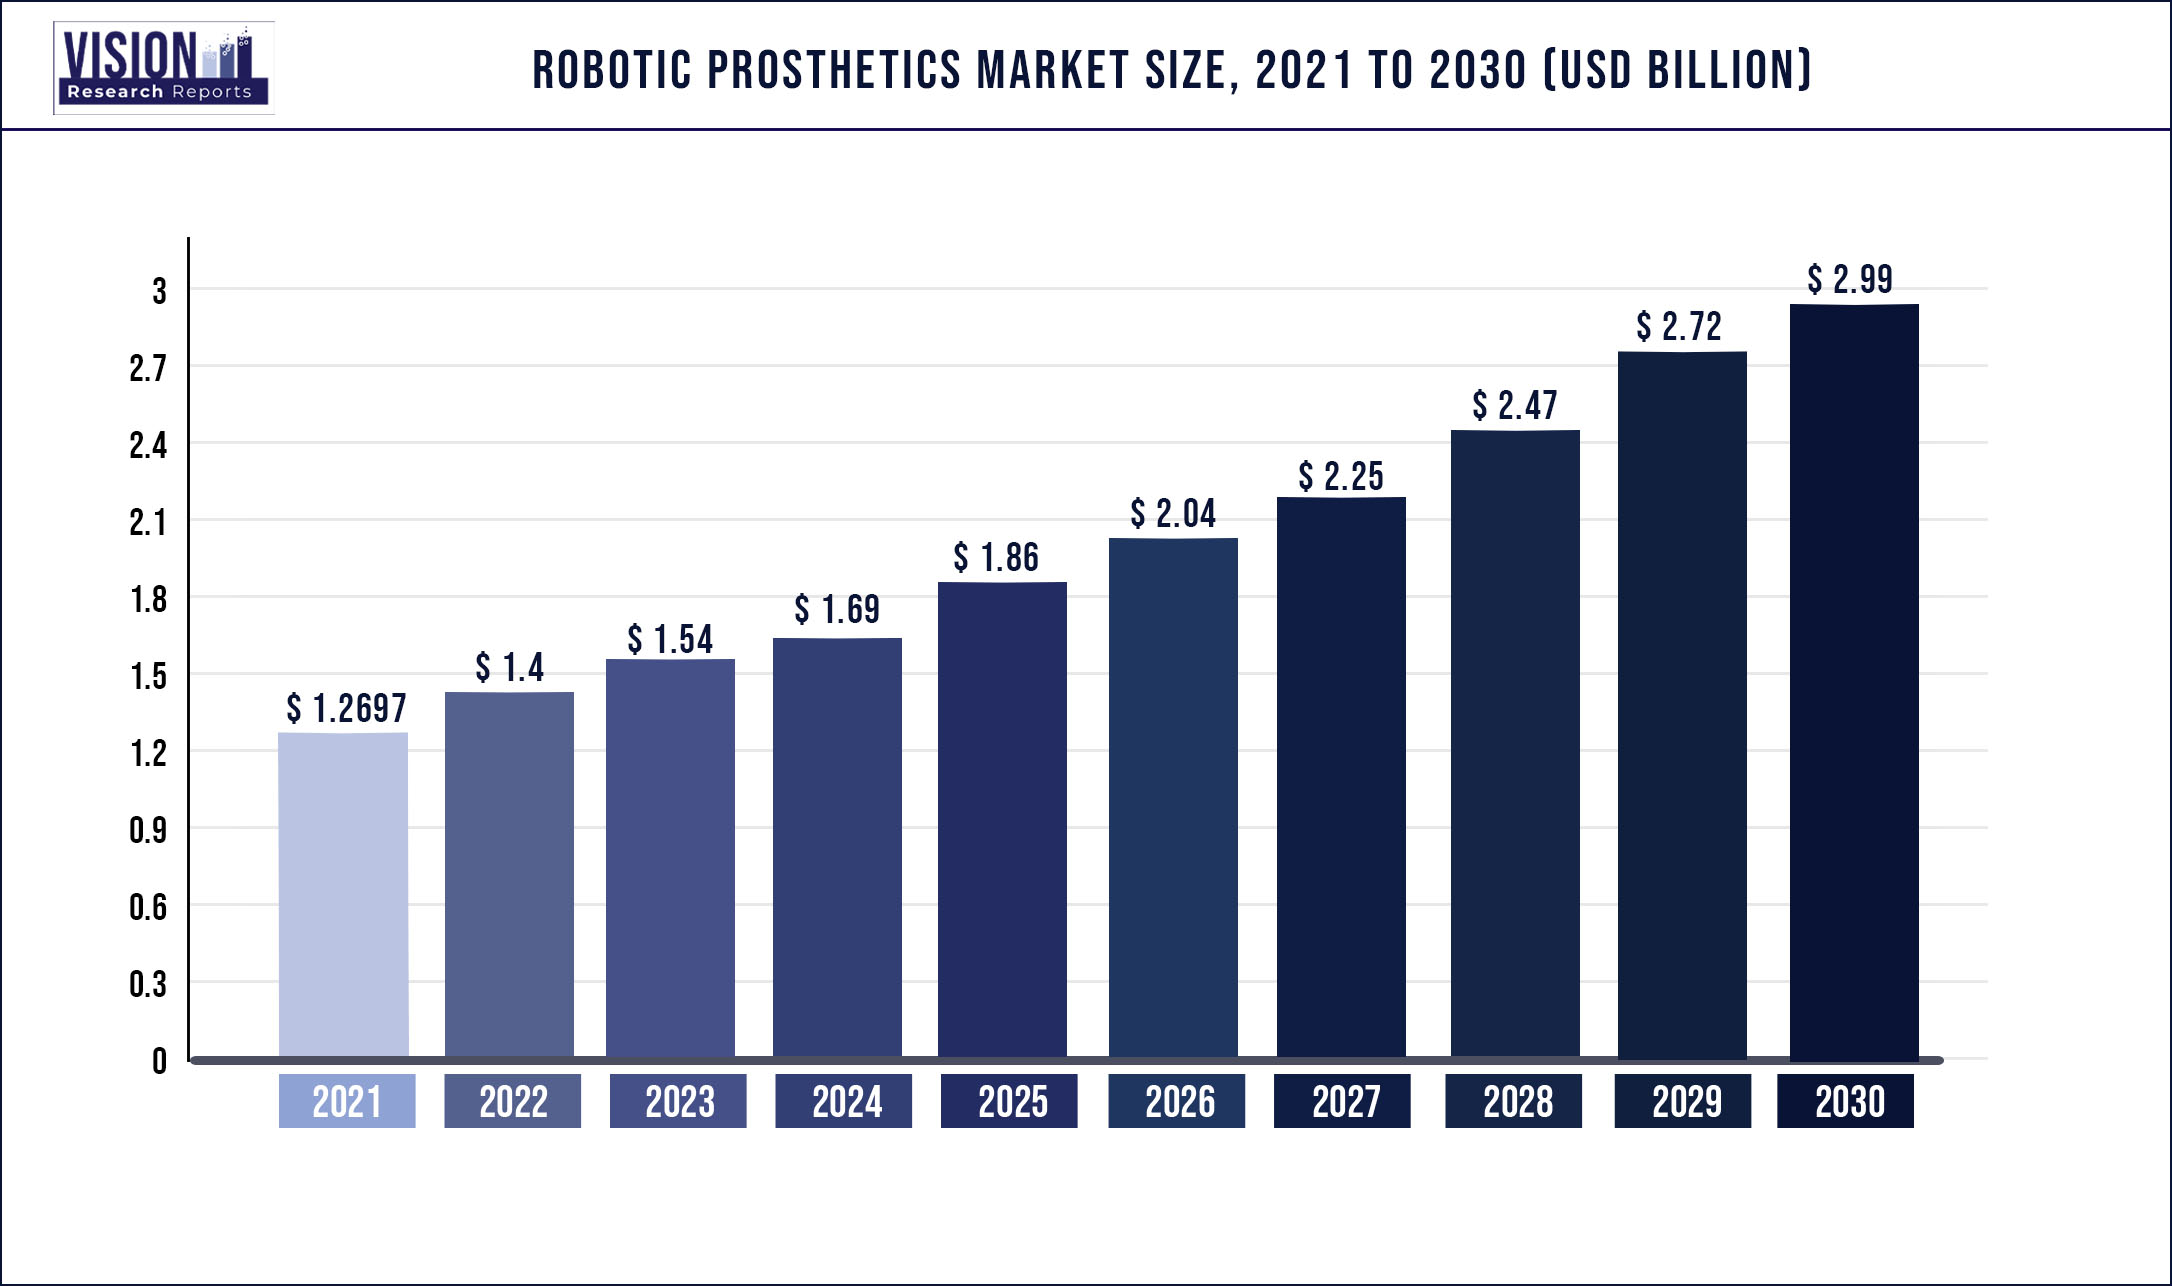 Robotic Prosthetics Market Size 2021 to 2030